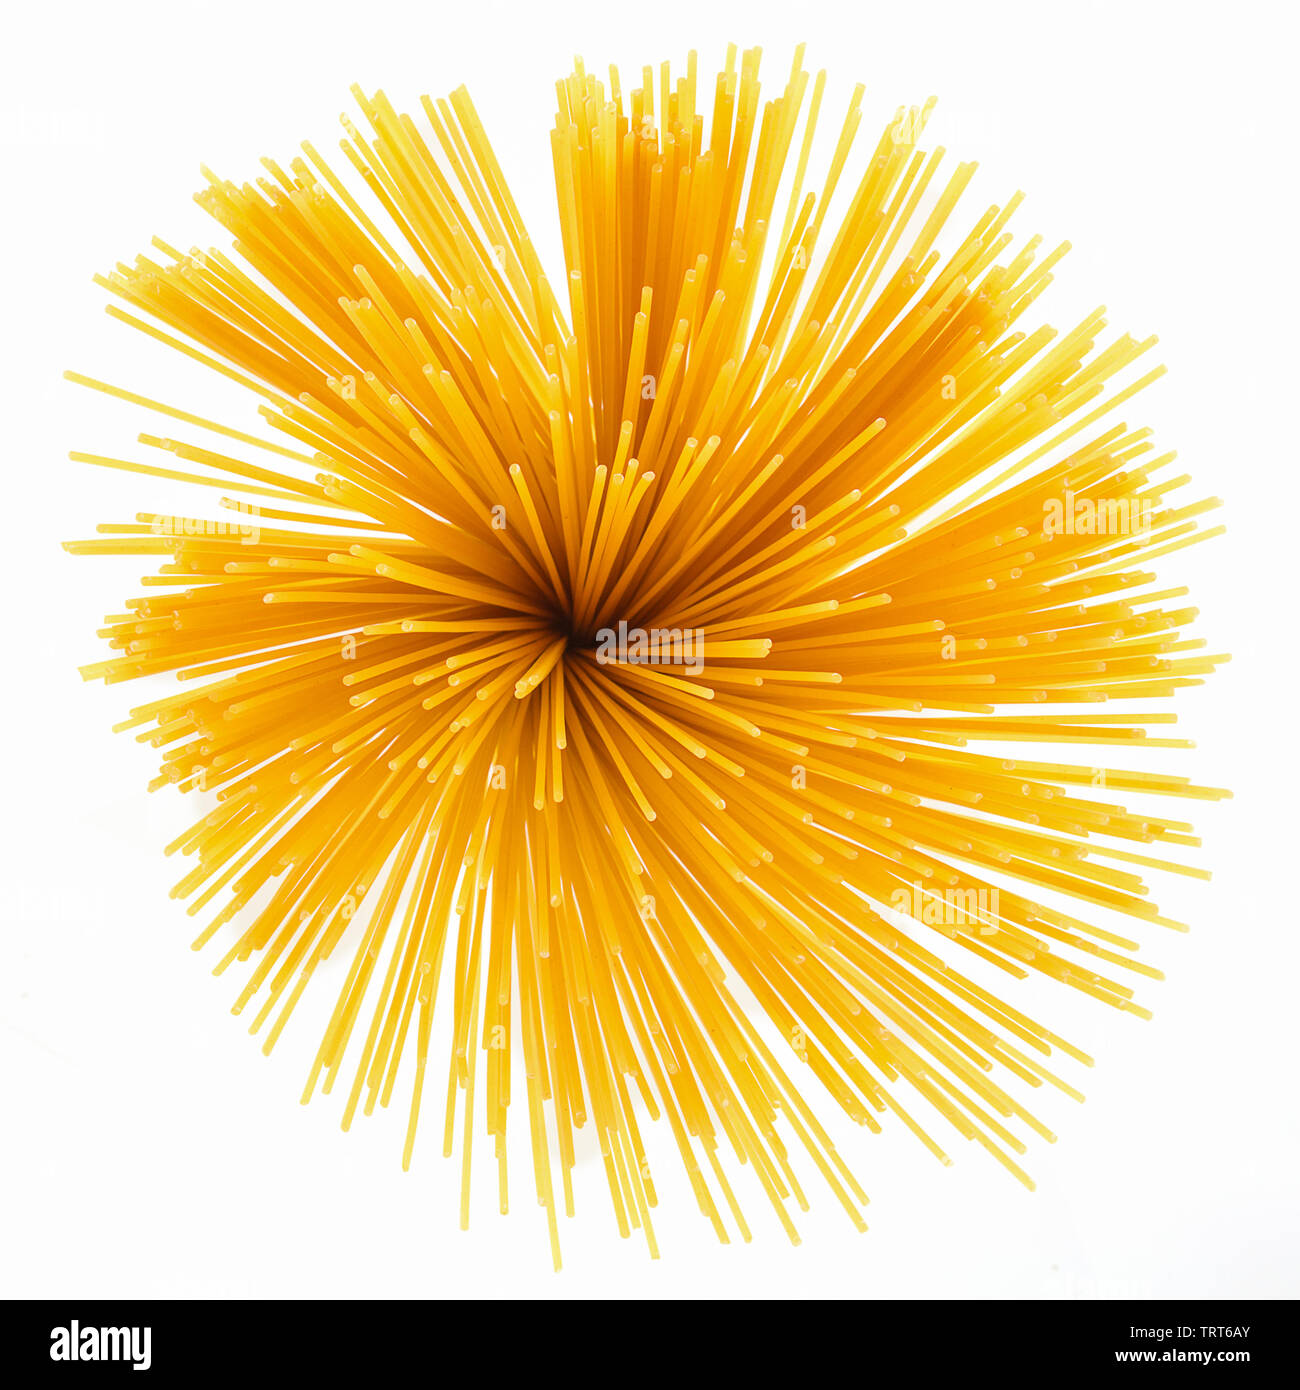 Bild vertikal von Spaghetti Stockfoto